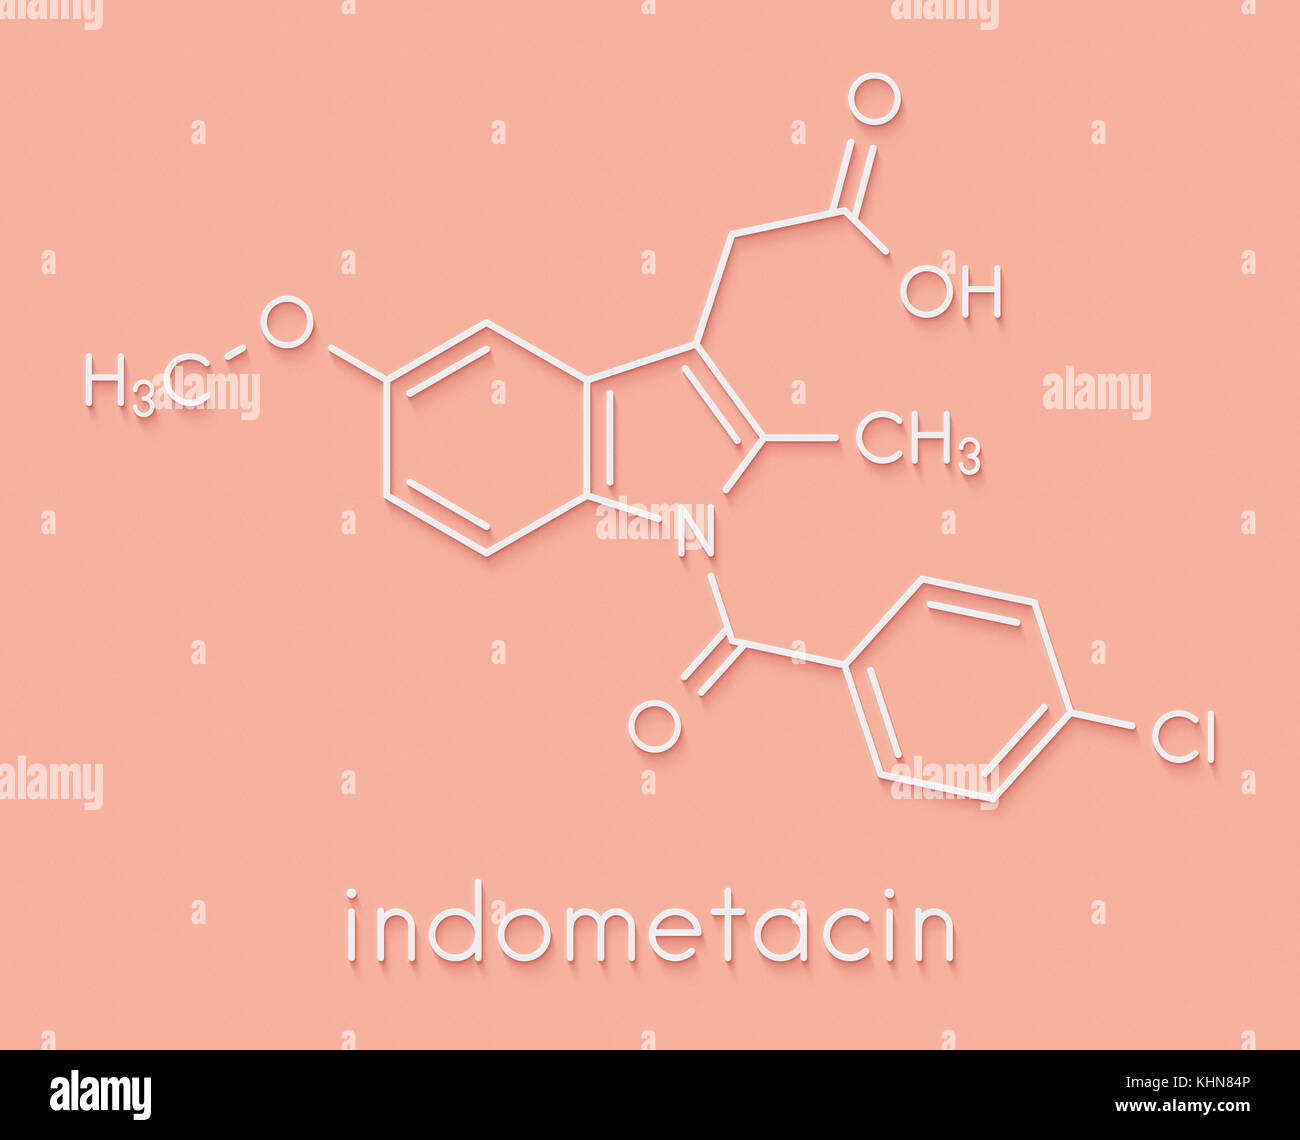 Indomethacin (indometacin) non-steroidal anti-inflammatory drug (NSAID) molecule. Skeletal formula. Stock Photo